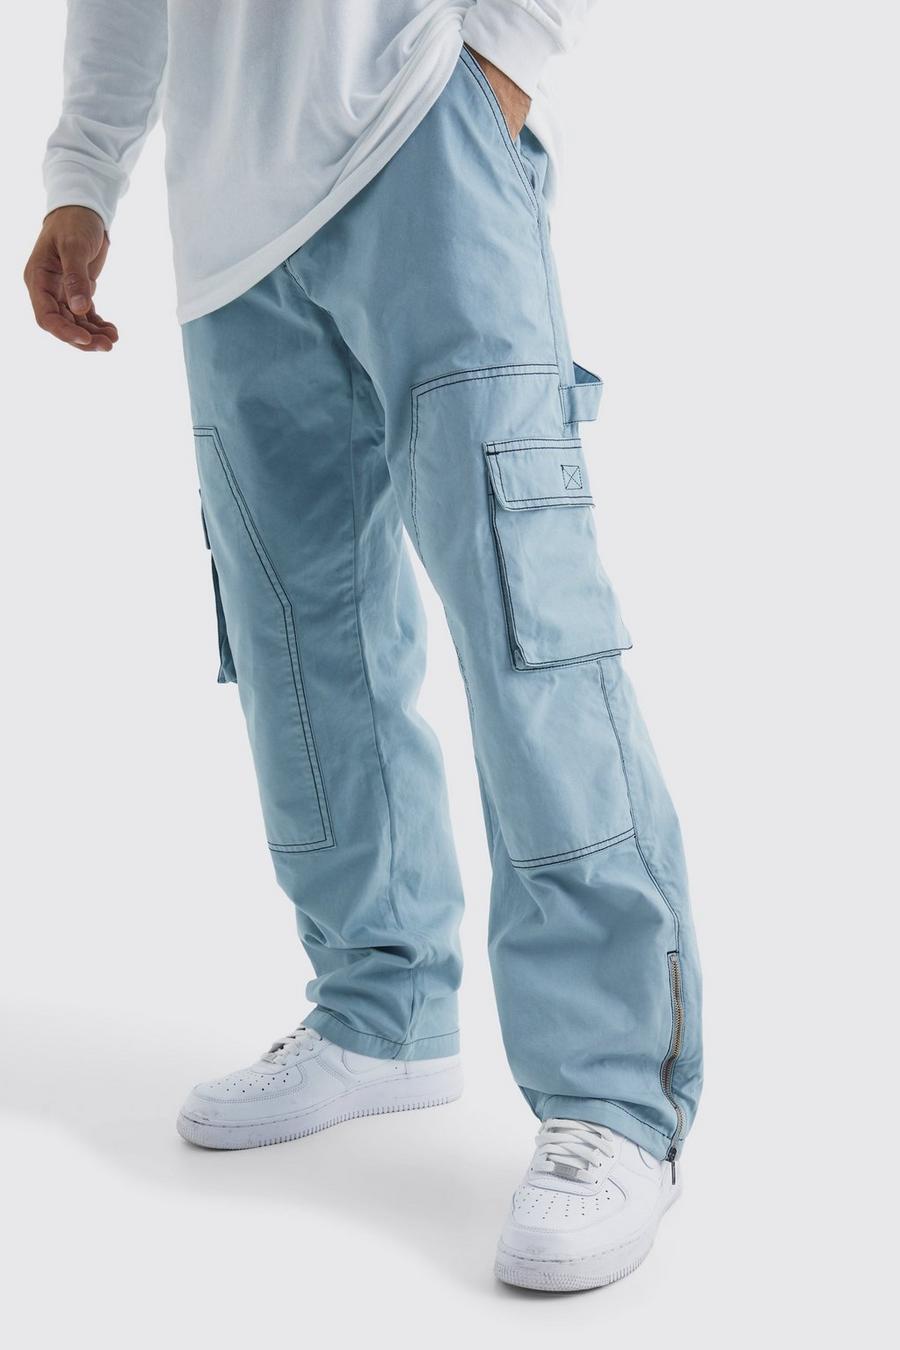 Pantaloni rilassati stile Carpenter con cuciture a contrasto e zip sul fondo, Slate image number 1